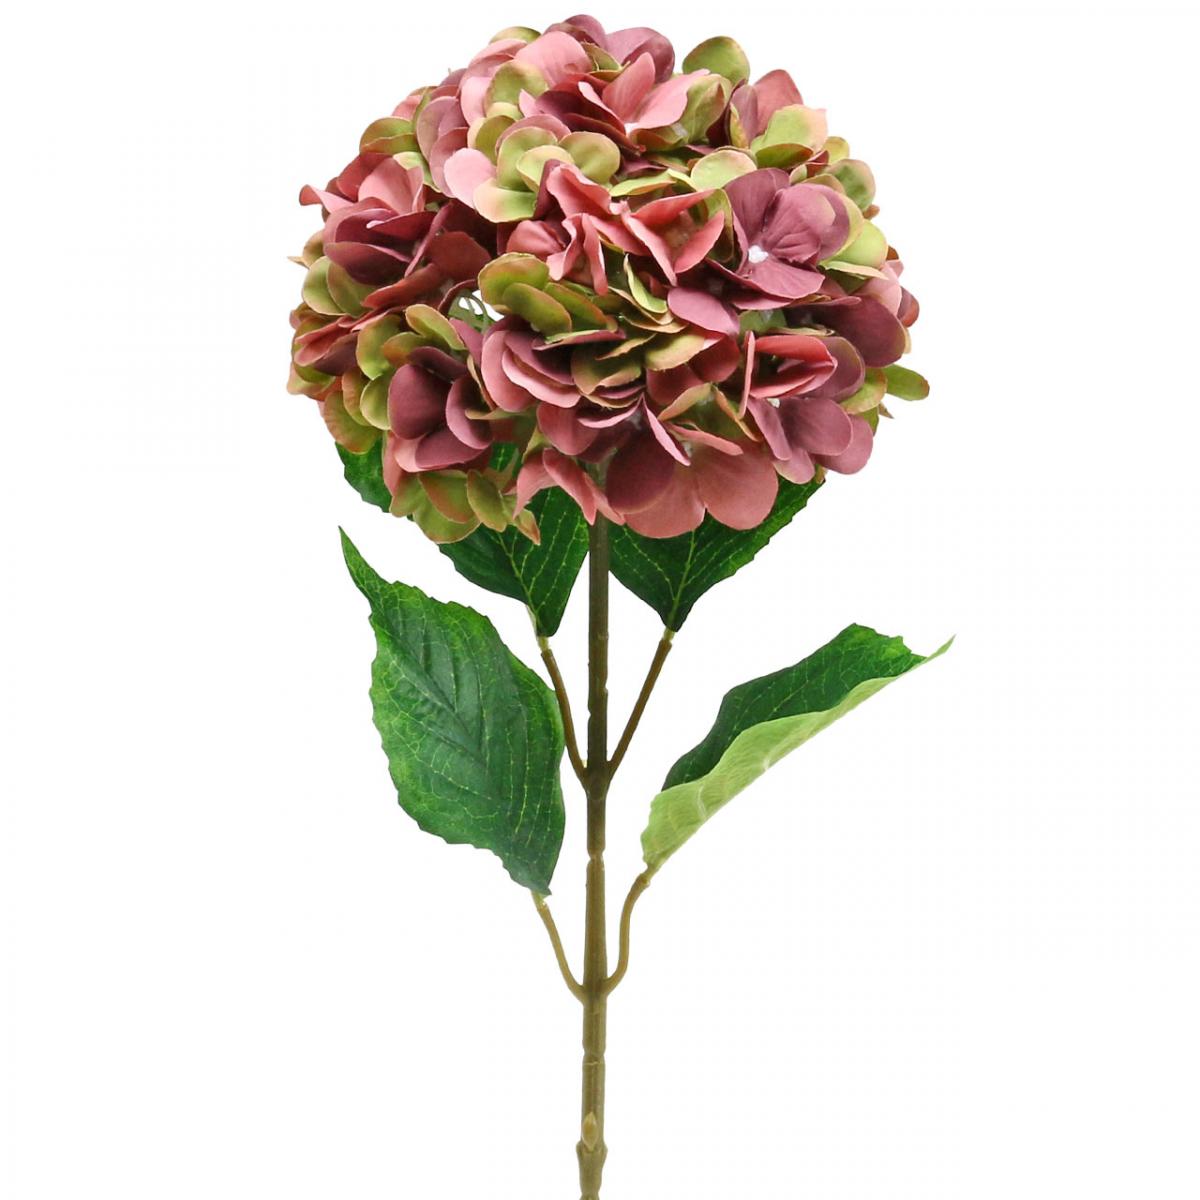 groß Hortensie Rosa, 80cm-69802 Floristik24.de Kunstblume künstlich Bordeaux